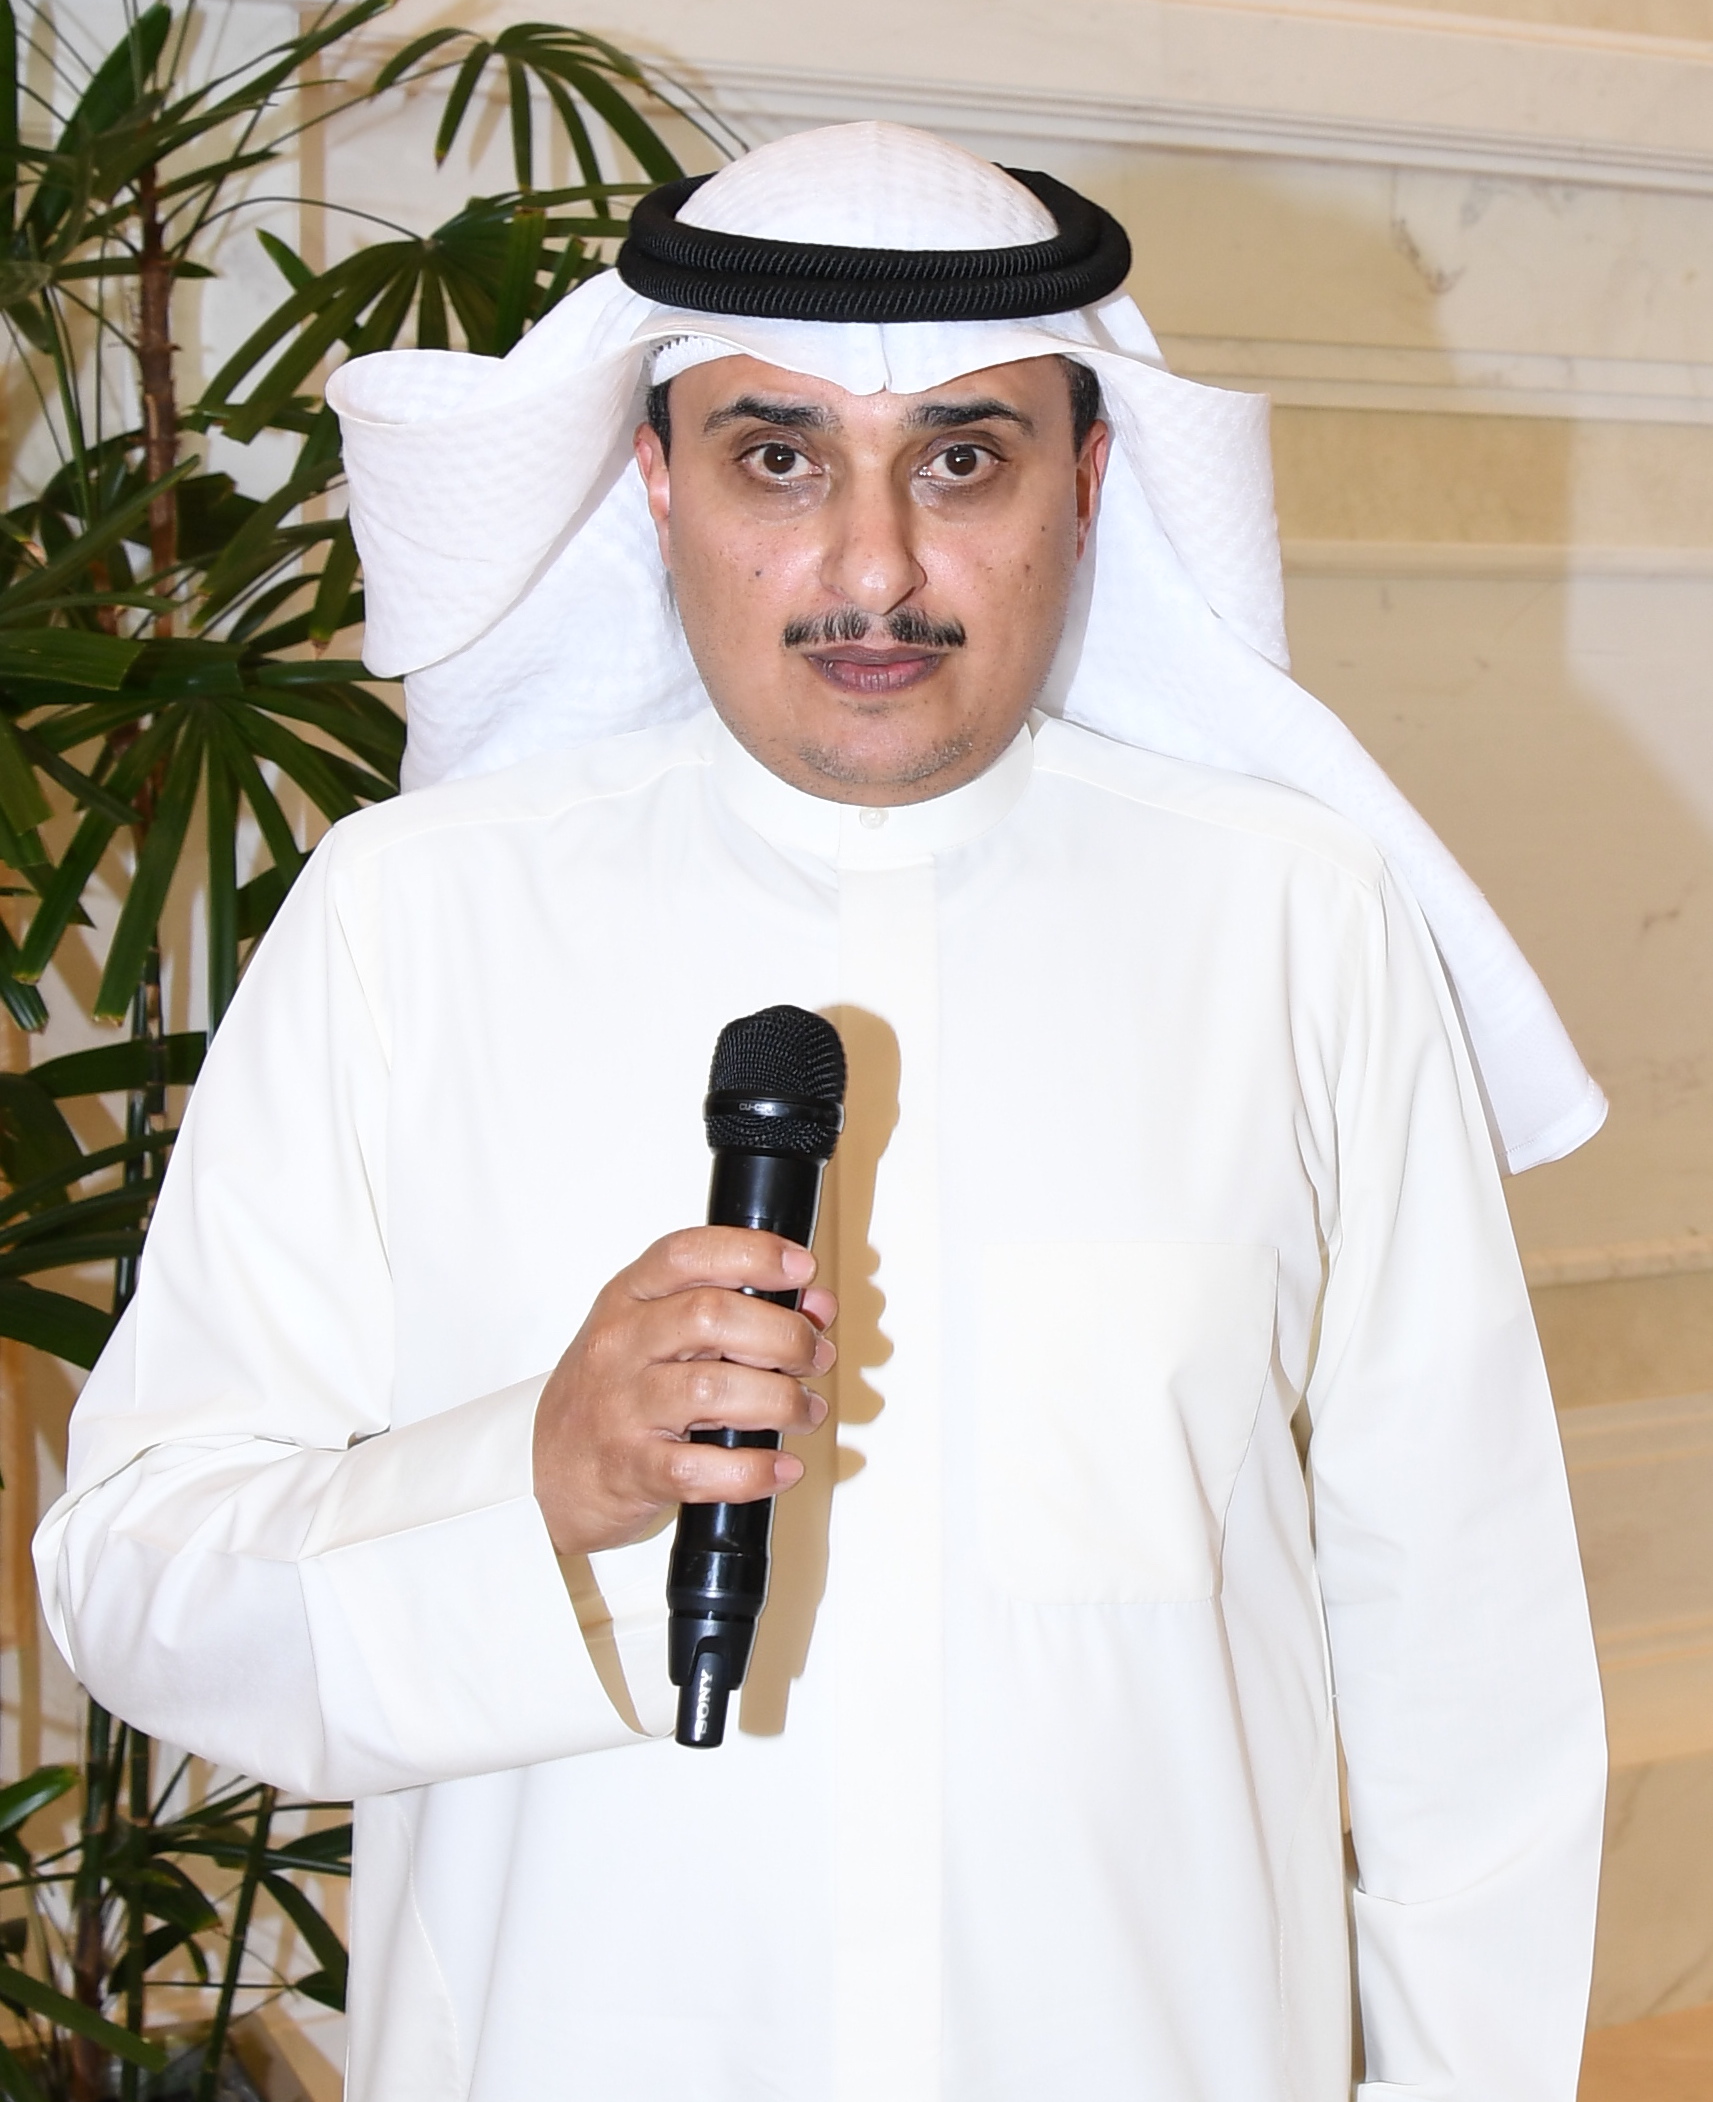 Kuwaiti Municipality's Director General Ahmad Al-Manfouhi speaks after the meeting with His Highness the Amir Sheikh Sabah Al-Ahmad Al-Jaber Al-Sabah